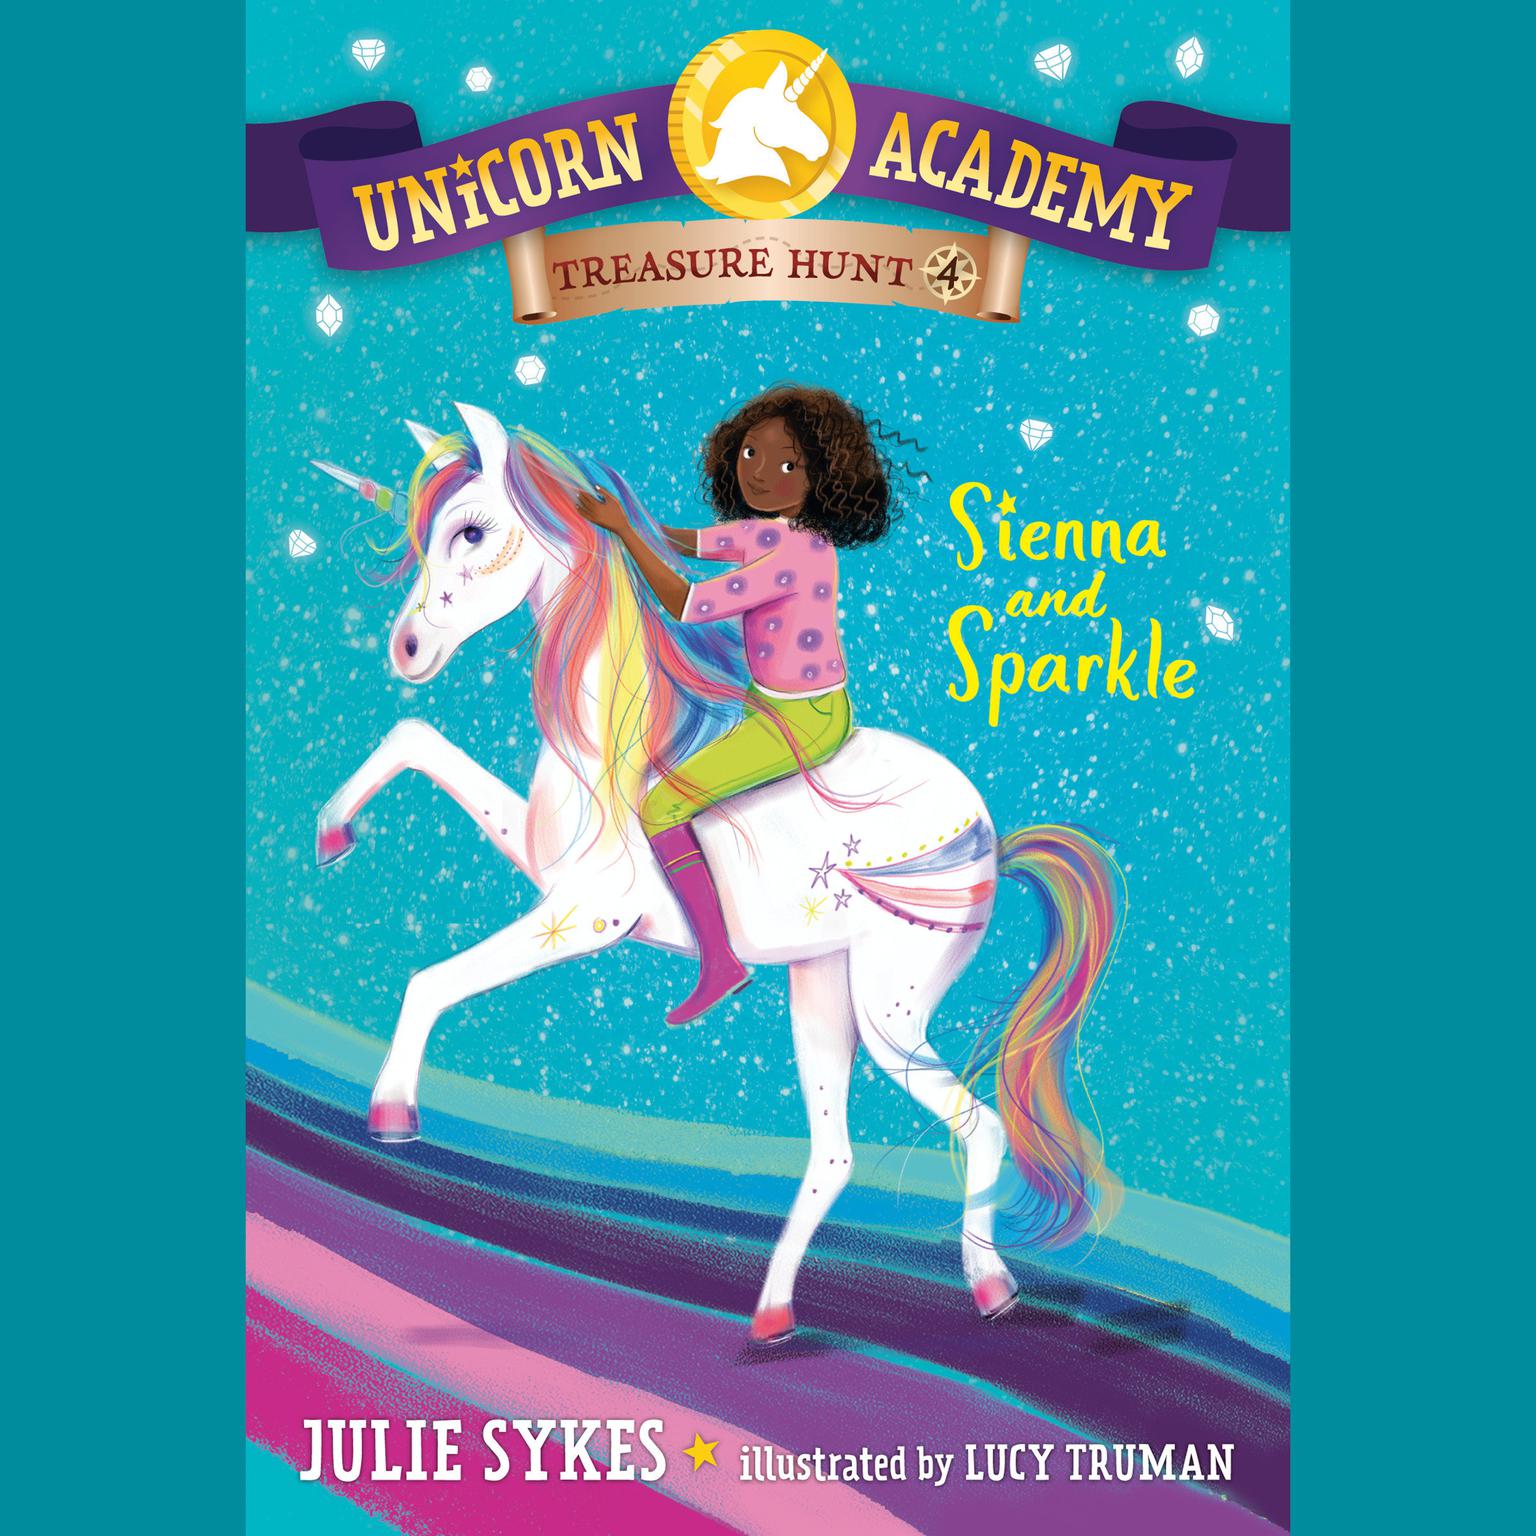 Unicorn Academy Treasure Hunt #4: Sienna and Sparkle Audiobook, by Julie Sykes